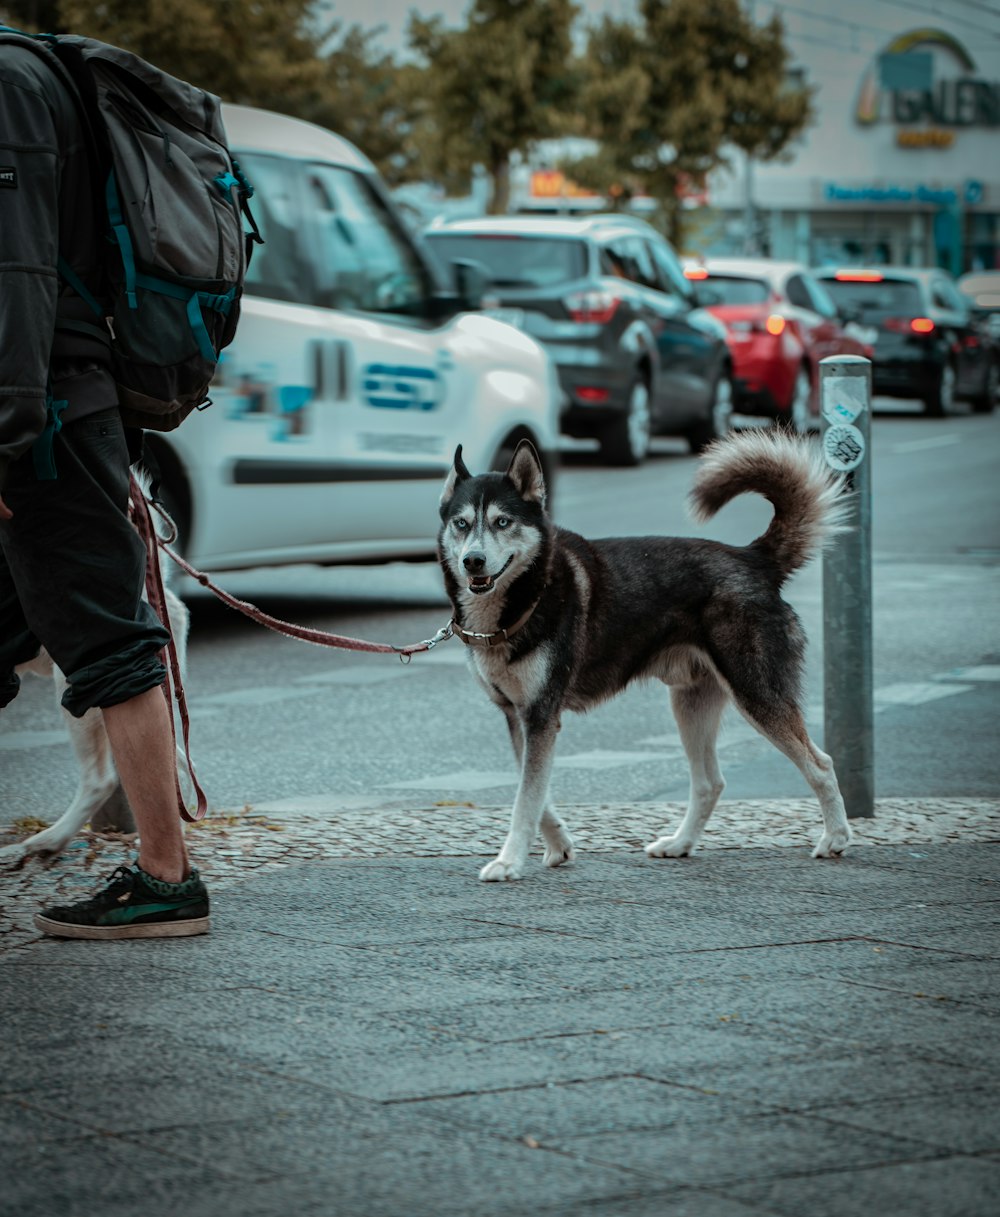 a dog tied to a pole on a city street